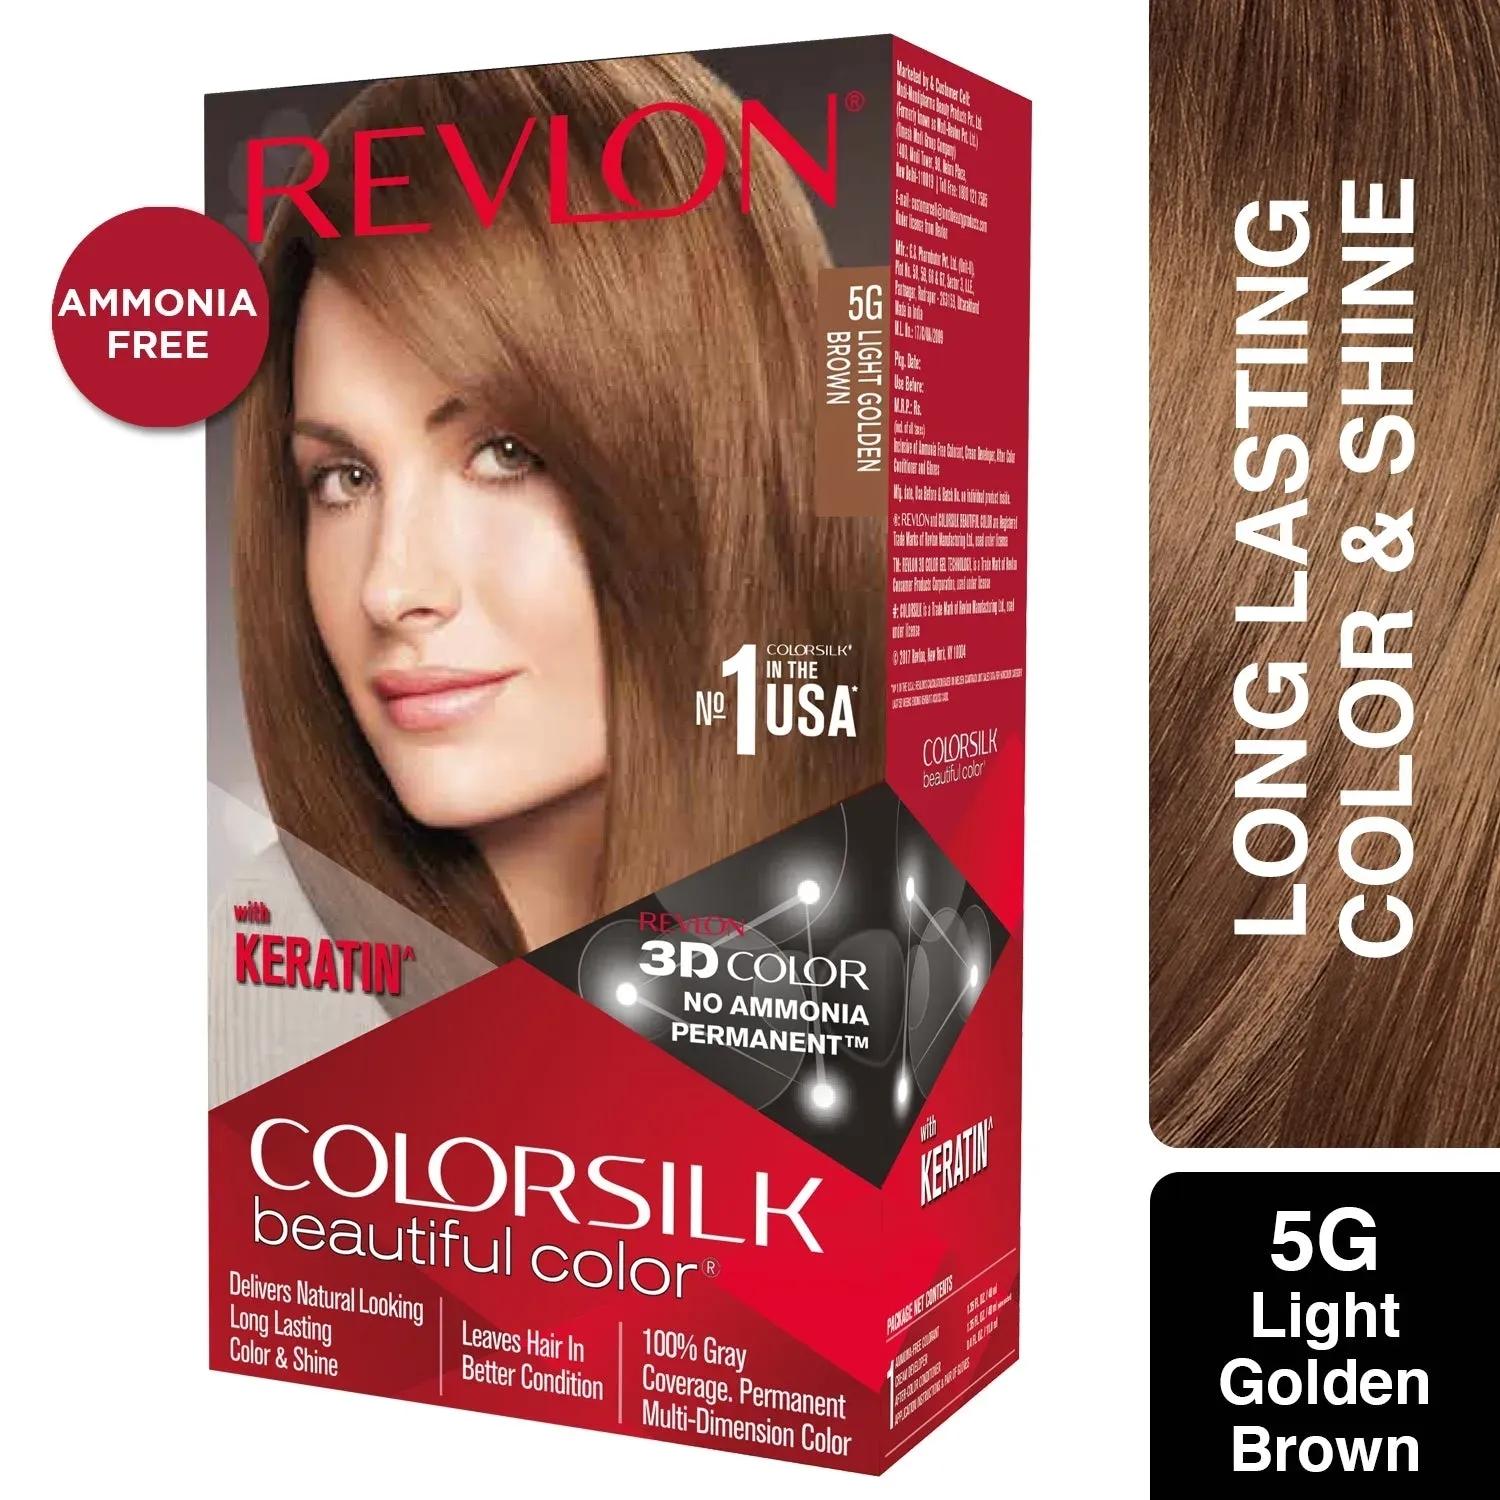 revlon colorsilk hair color - 5g light golden brown (91.8ml)